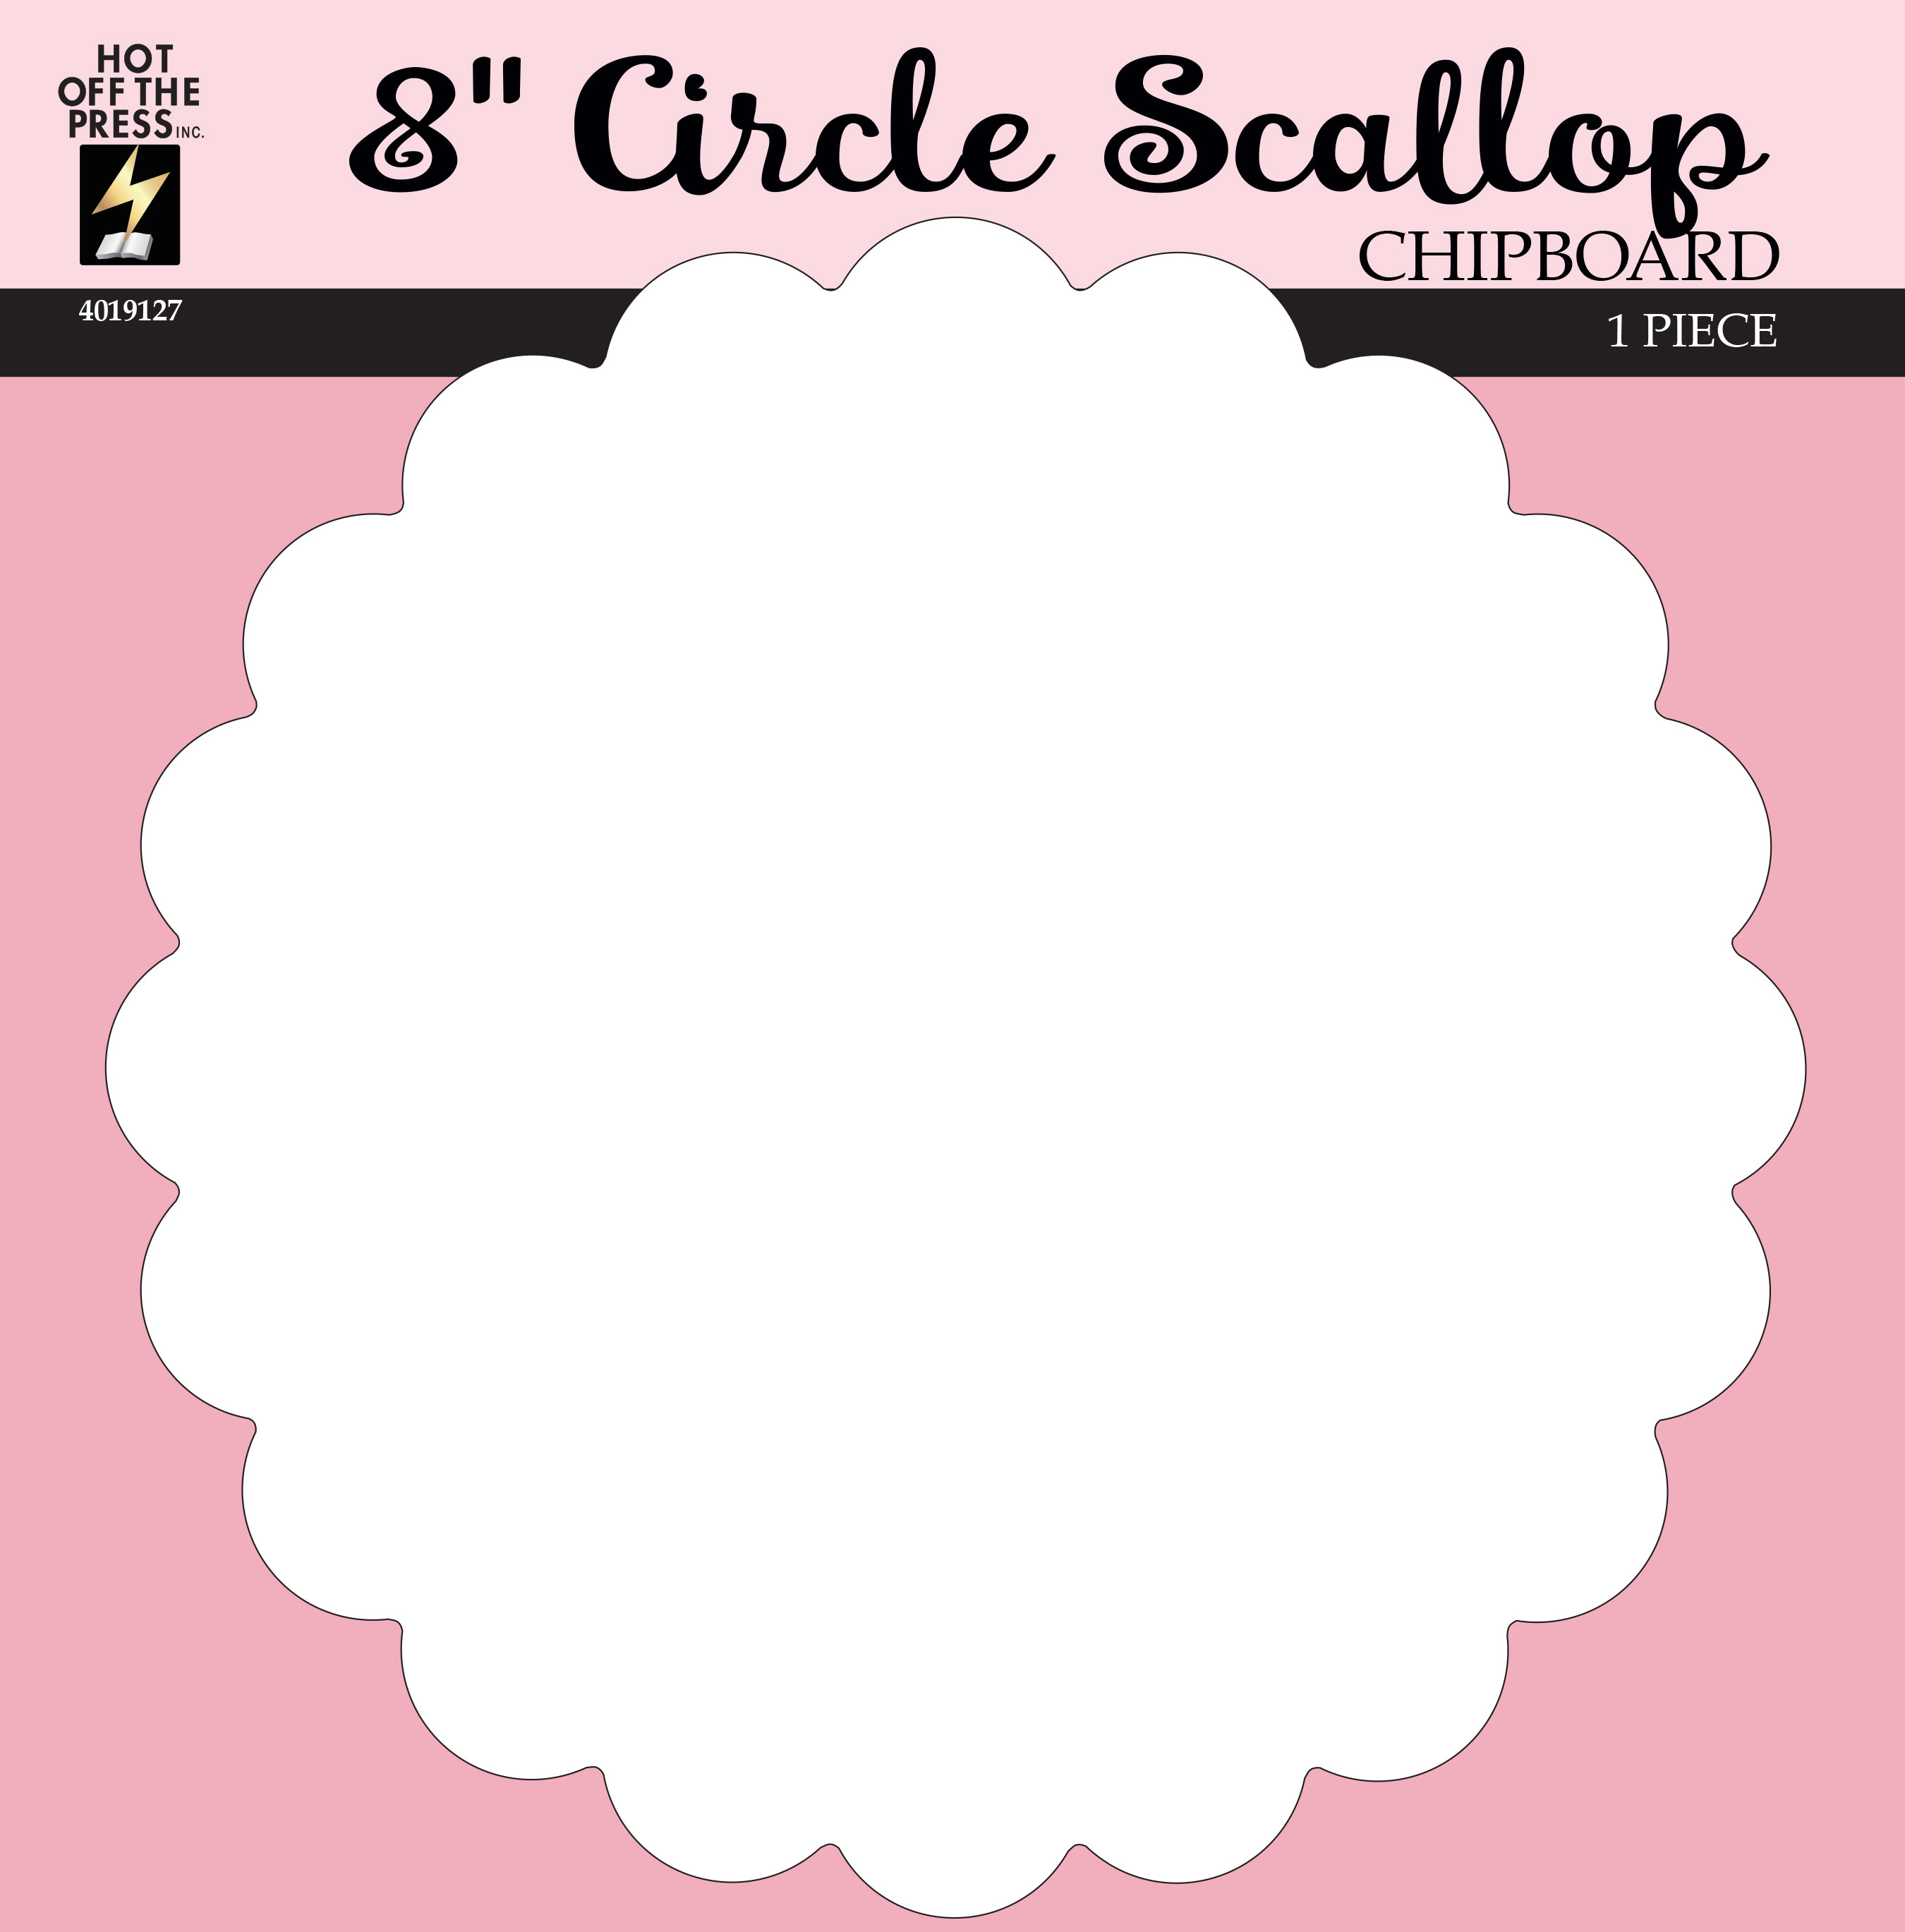 8" Circle Scallop Chipboard